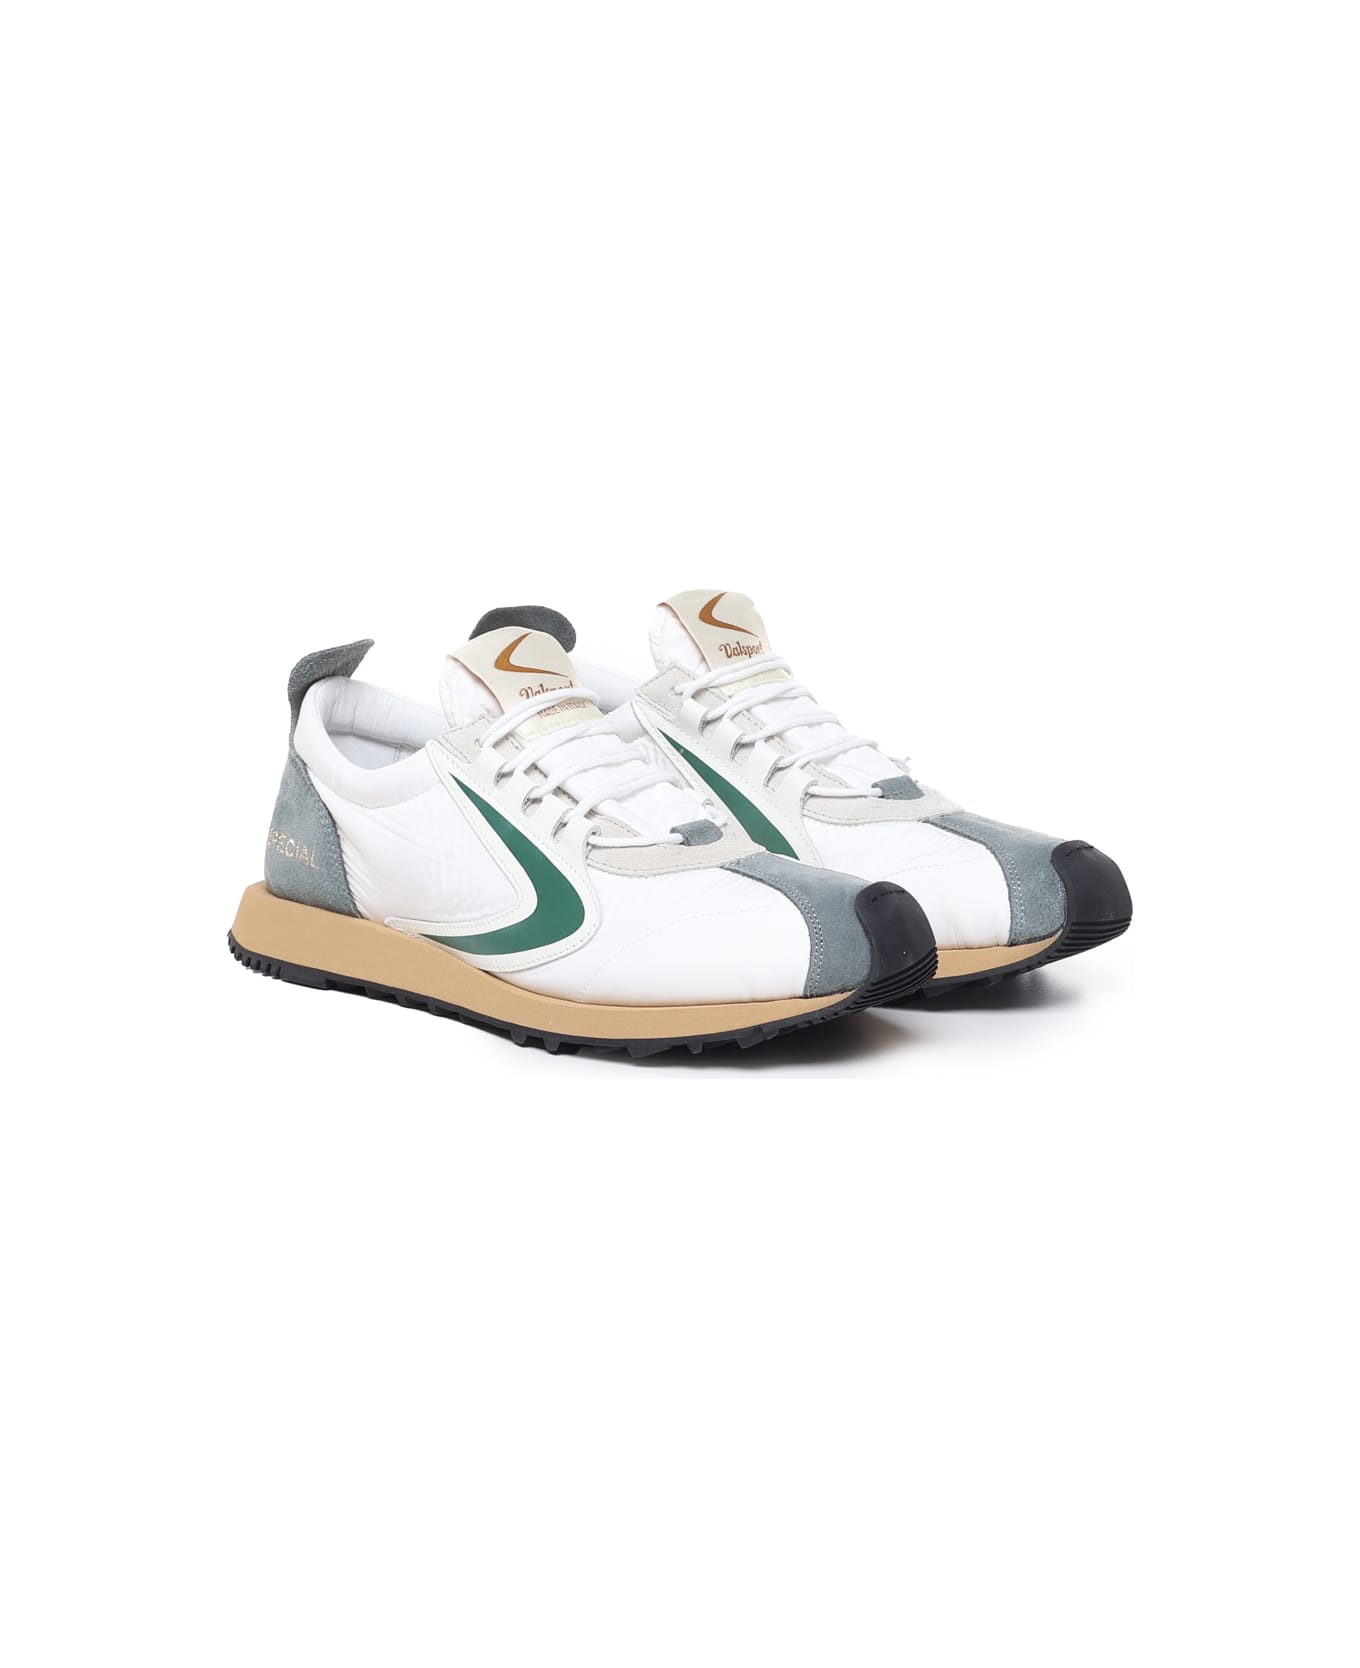 Valsport Special Nylon 03 Sneakers - White, grey, green  スニーカー